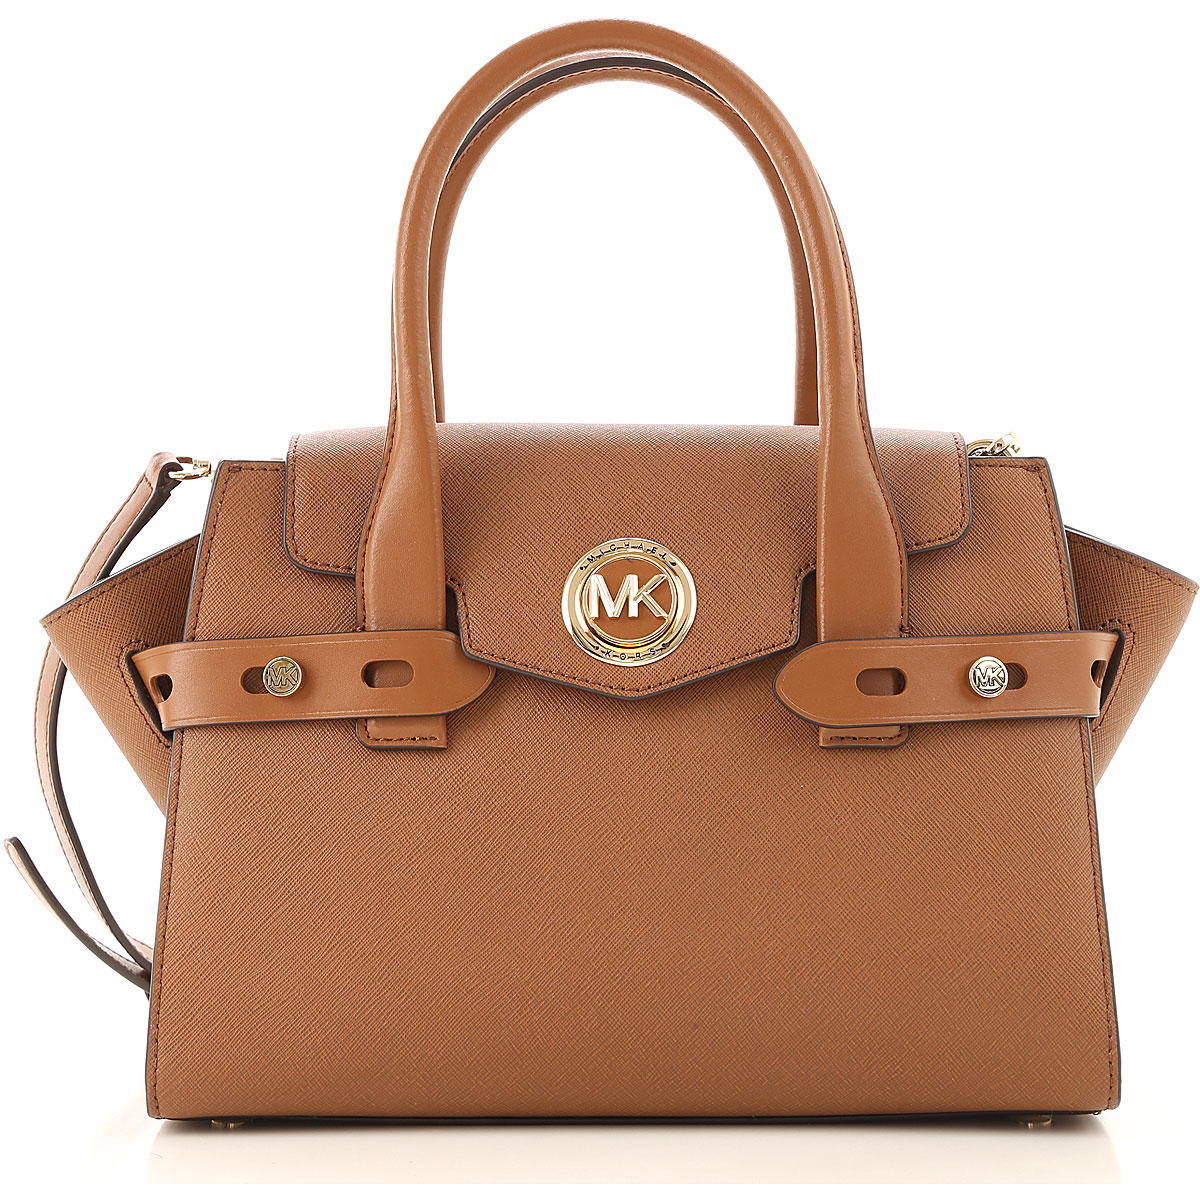 Handbags Michael Kors, Style code: 30s0gnms1l-luggage-